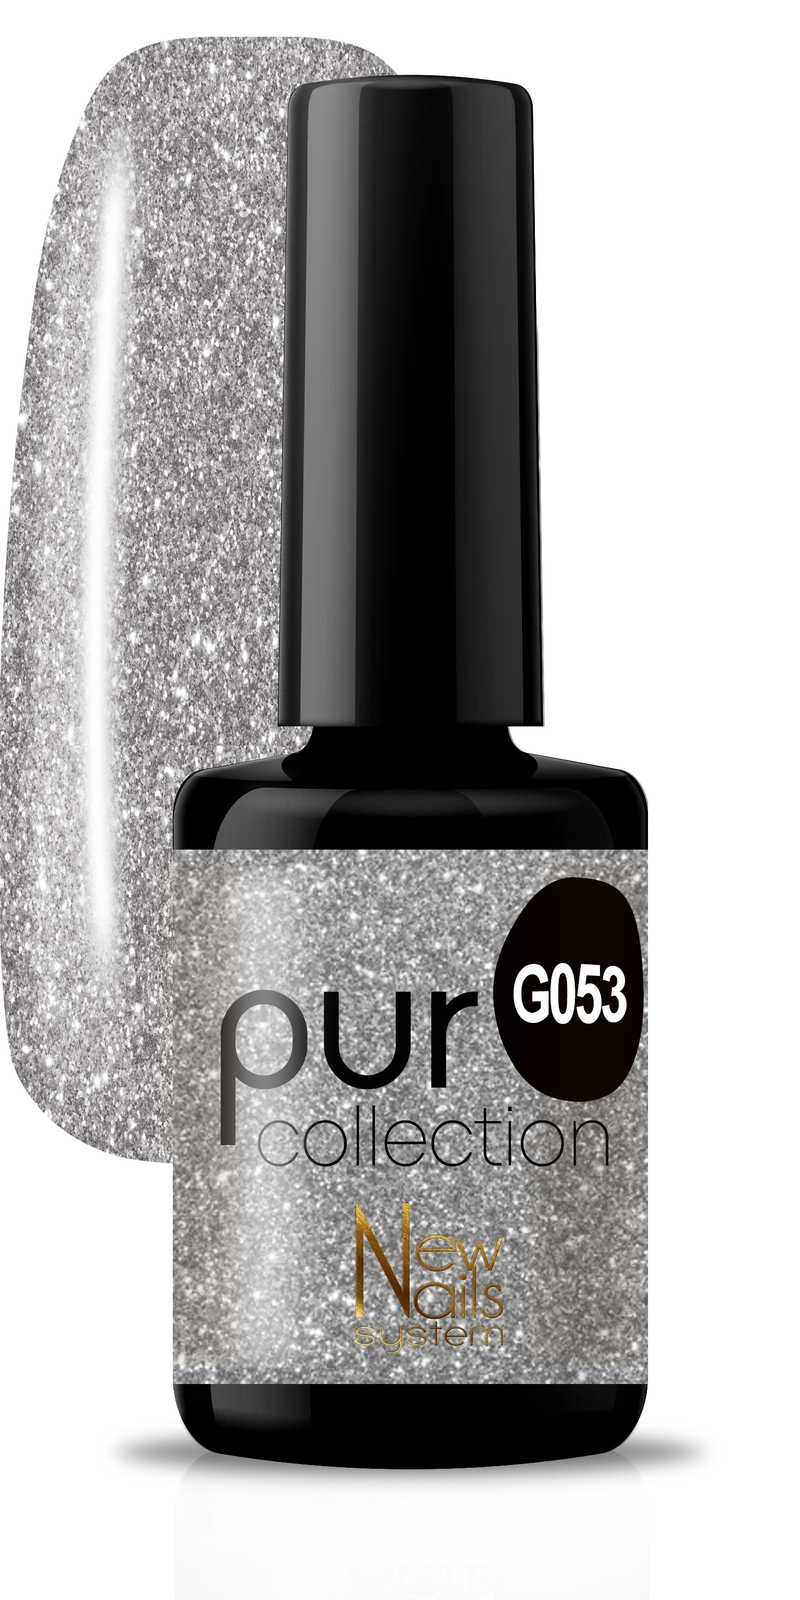 Puro collection G053 polish gel color 5ml